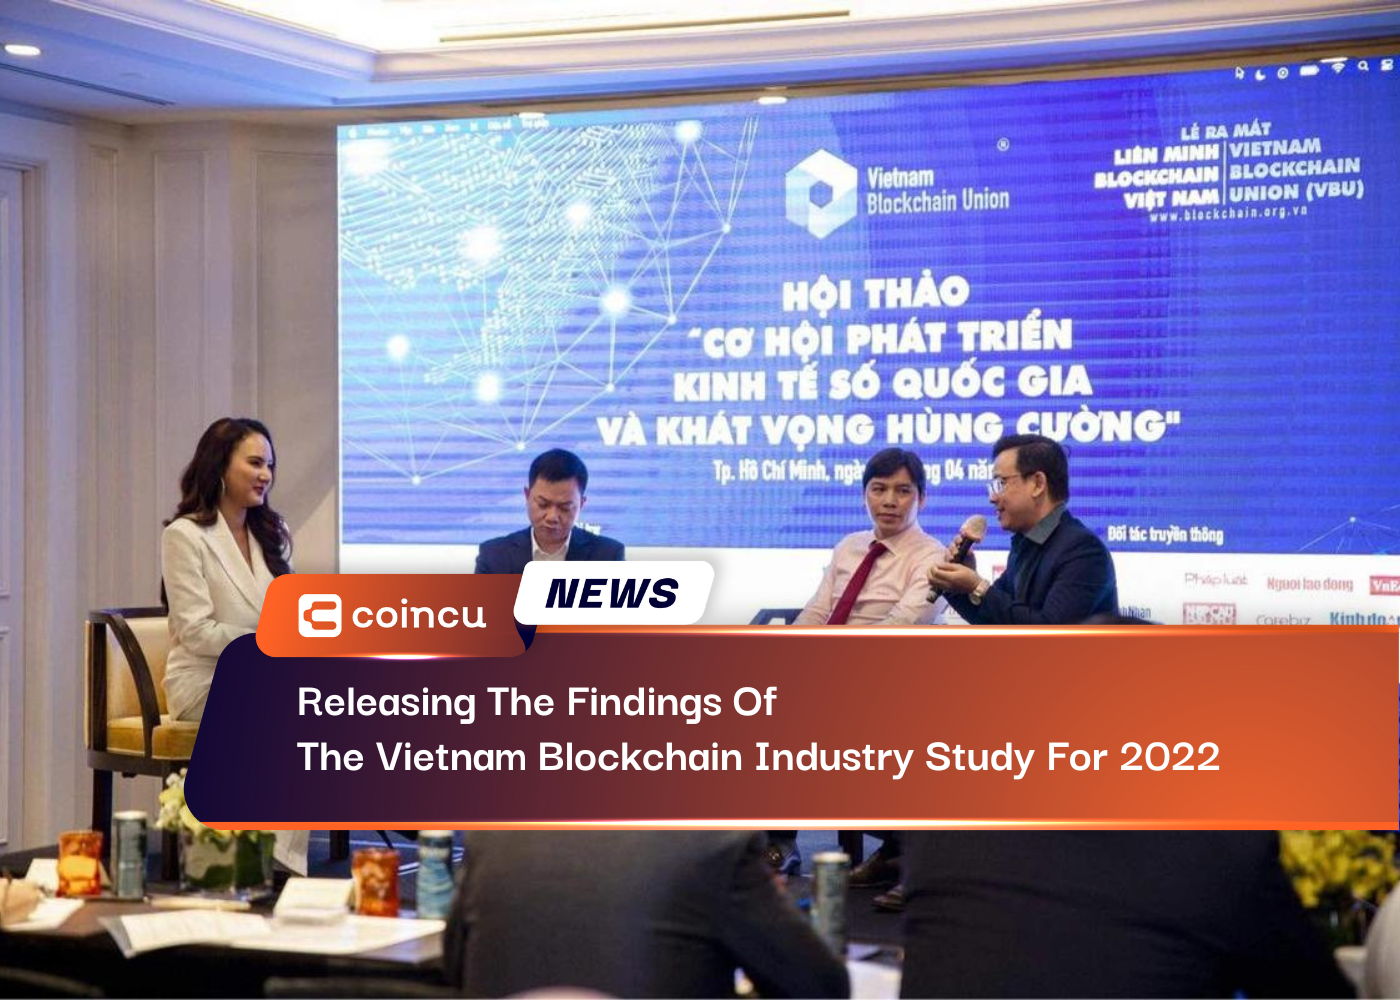 The Vietnam Blockchain Industry Study For 2022